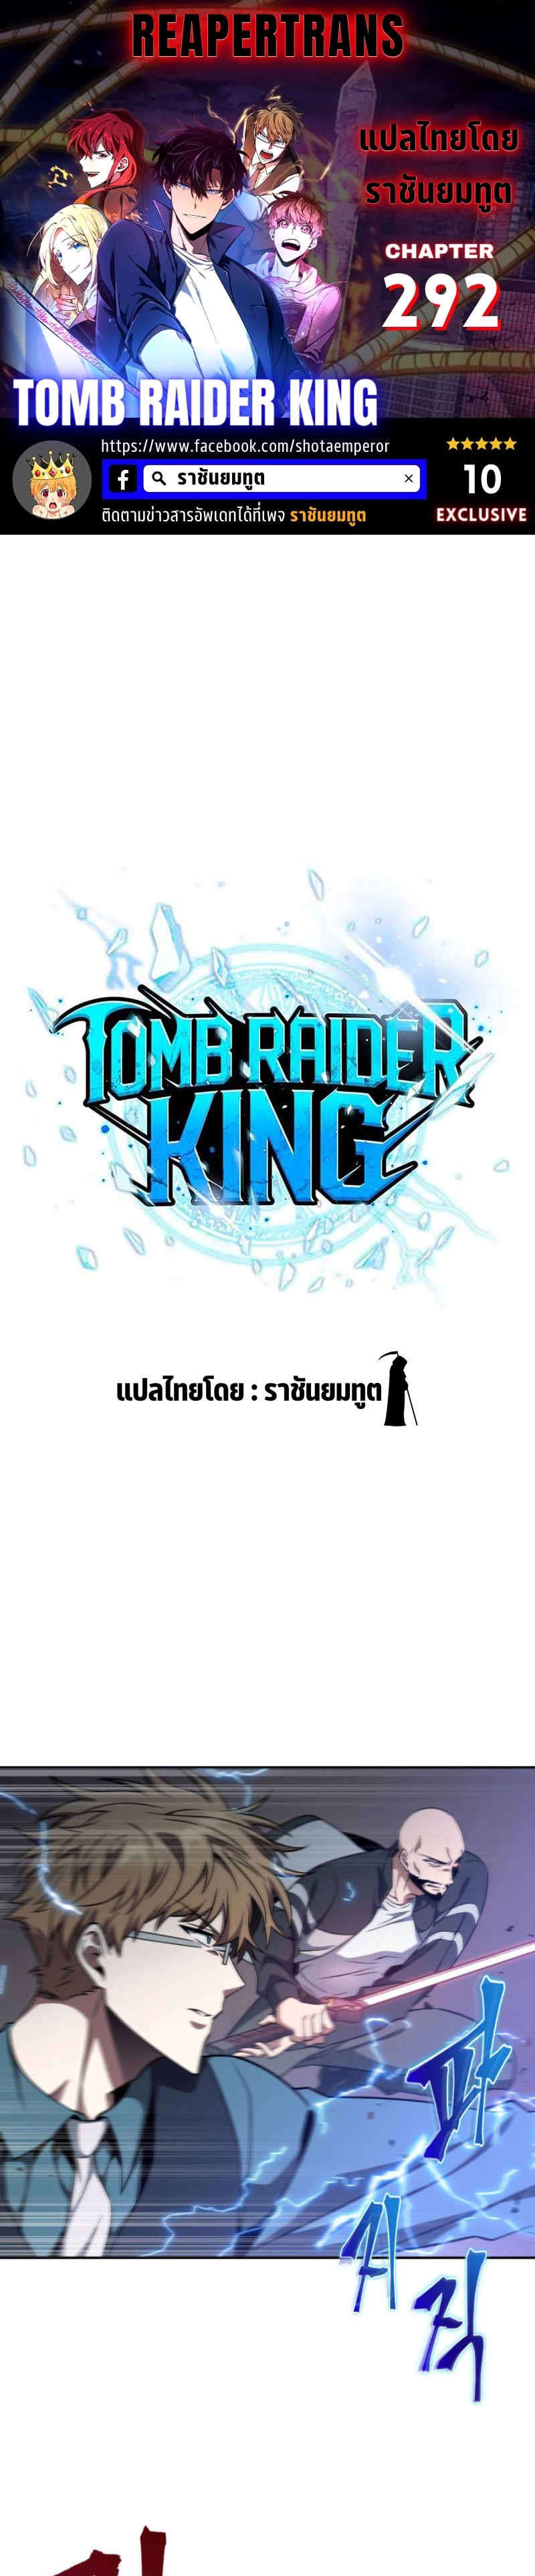 tomb raider king 292 (1)